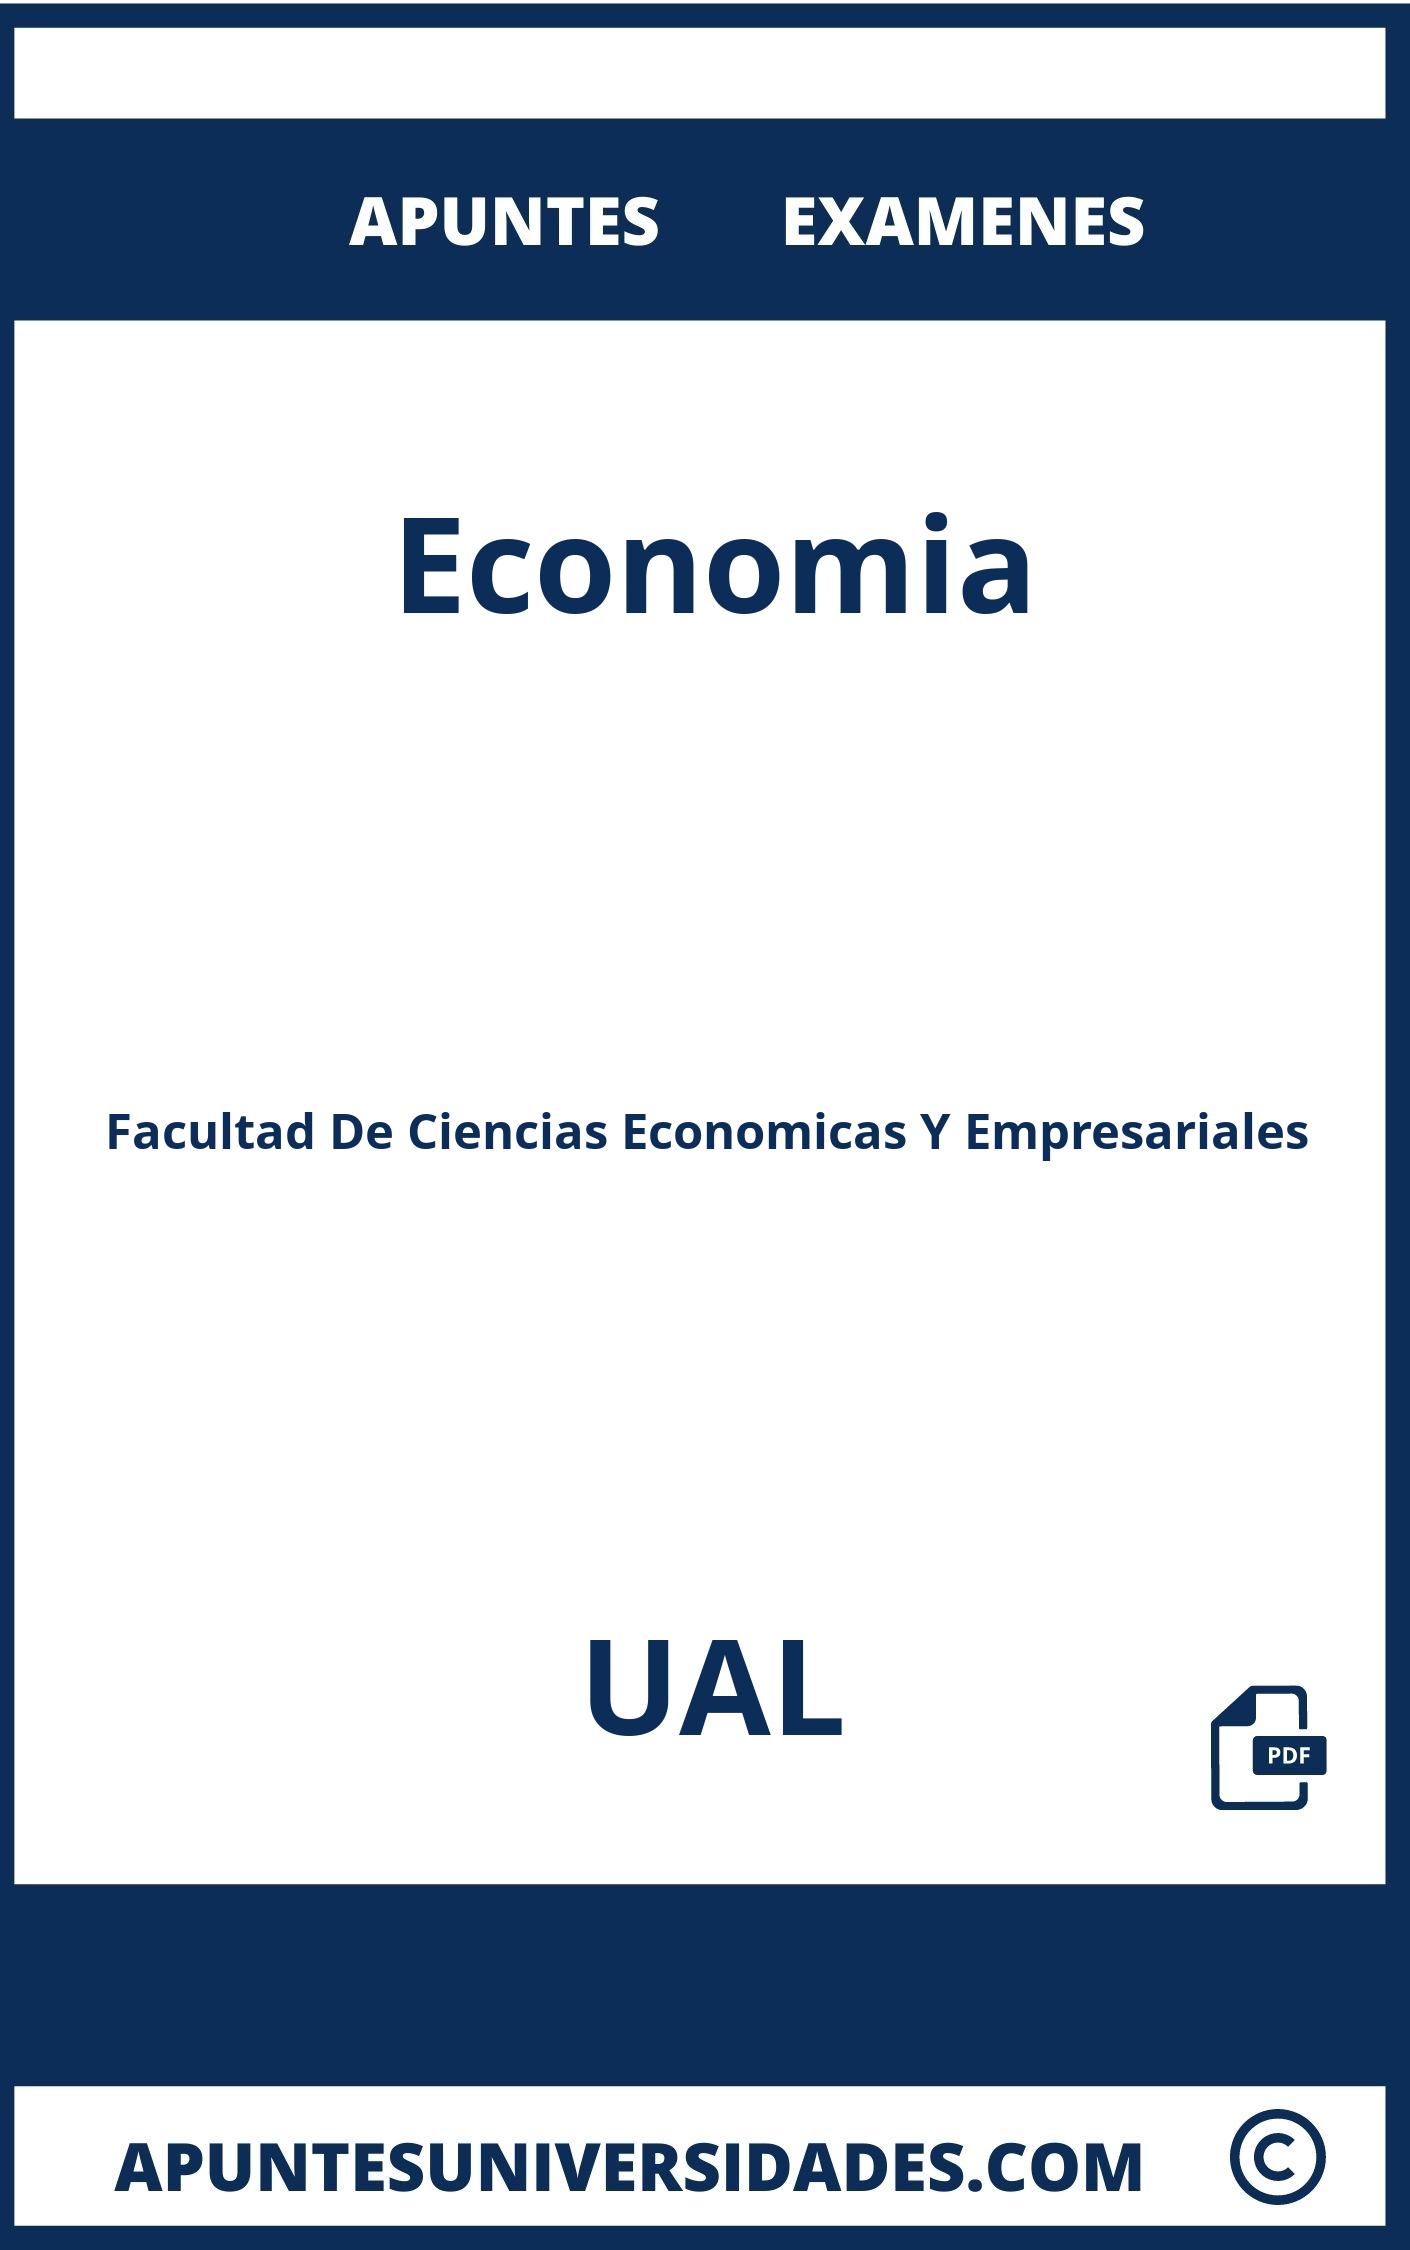 Economia UAL Apuntes Examenes